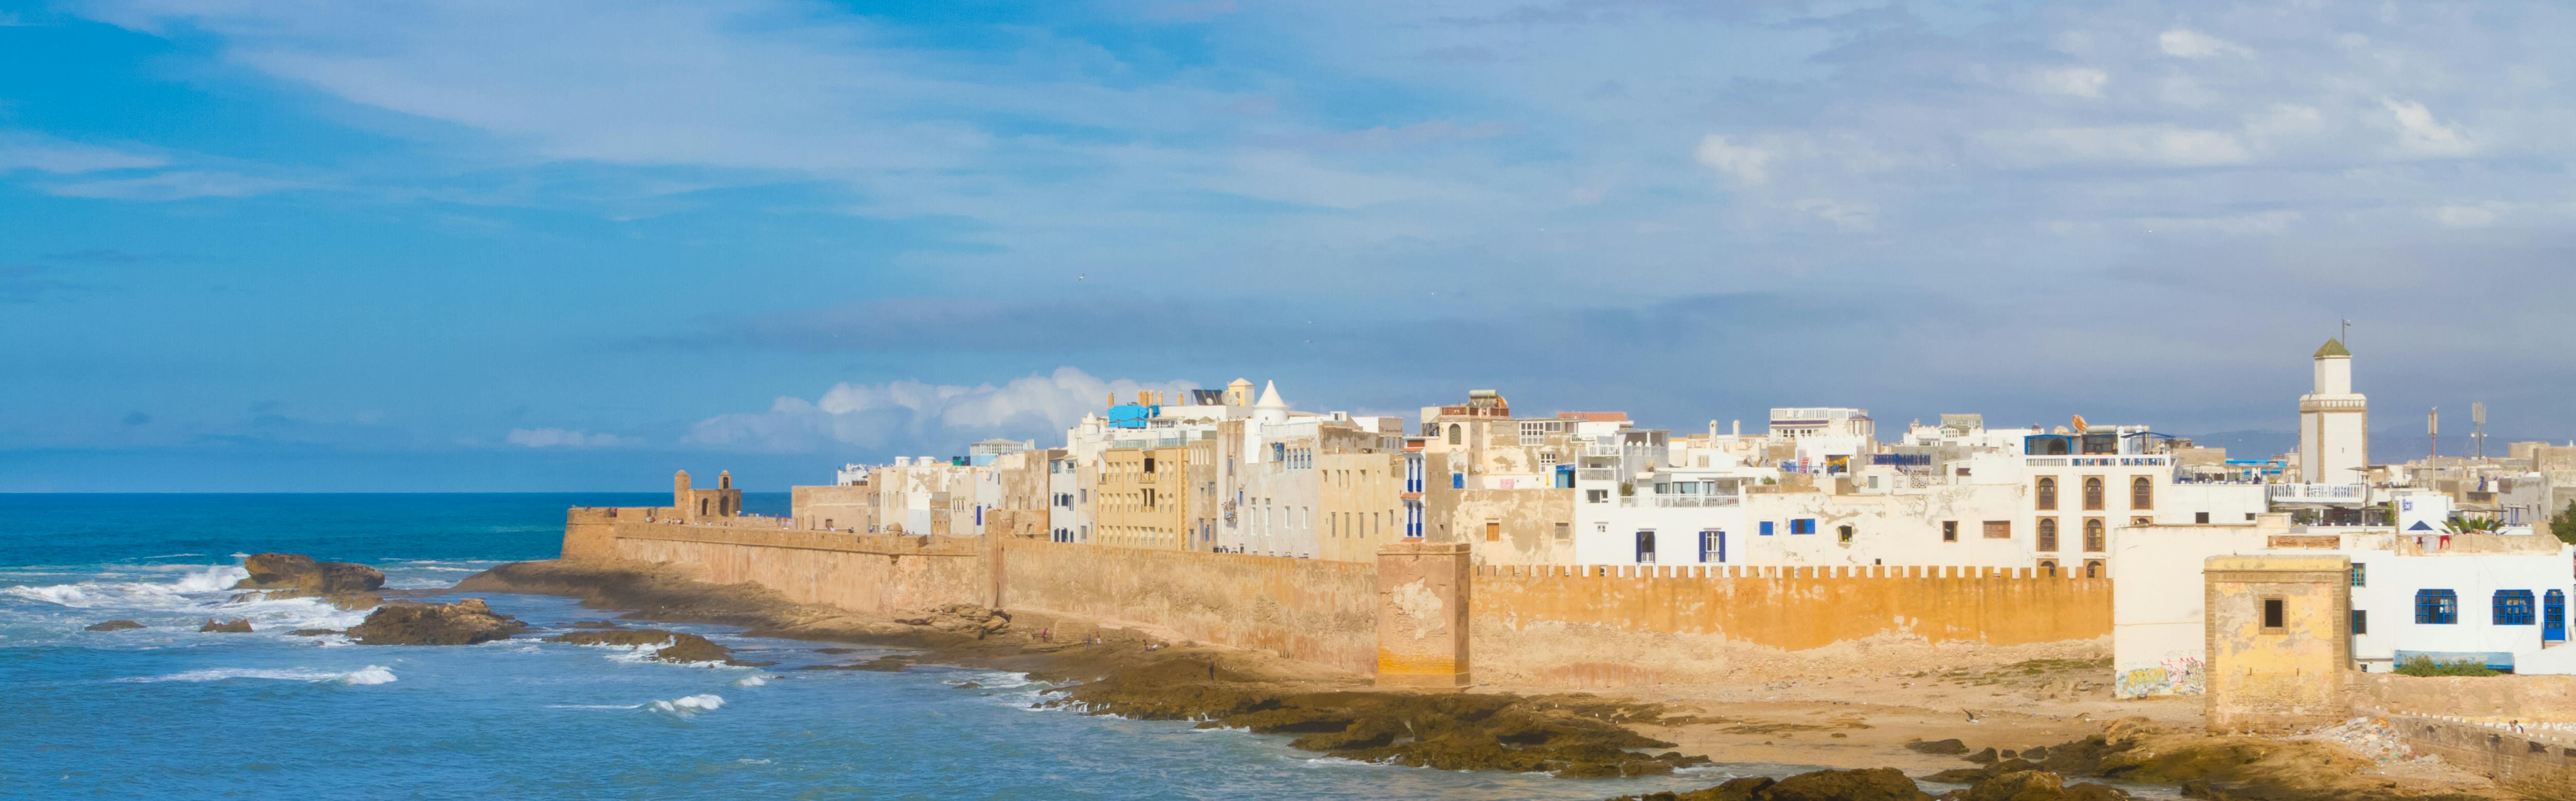 Ganztagesausflug nach Essaouira ab Marrakesch